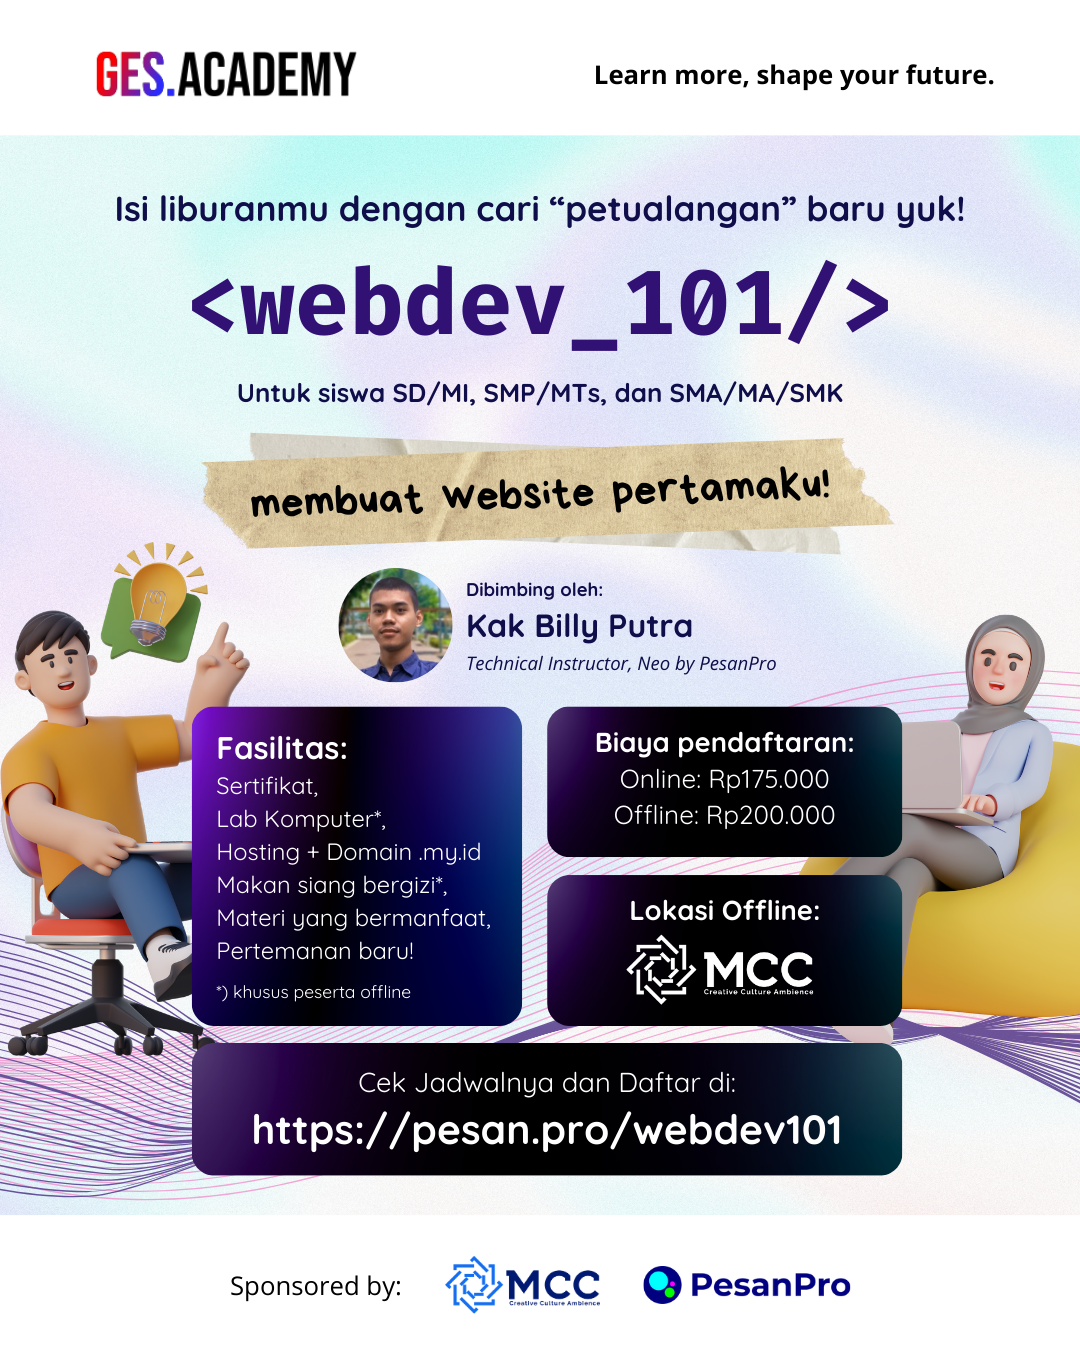 Webdev 101: Membuat Website Pertamaku!